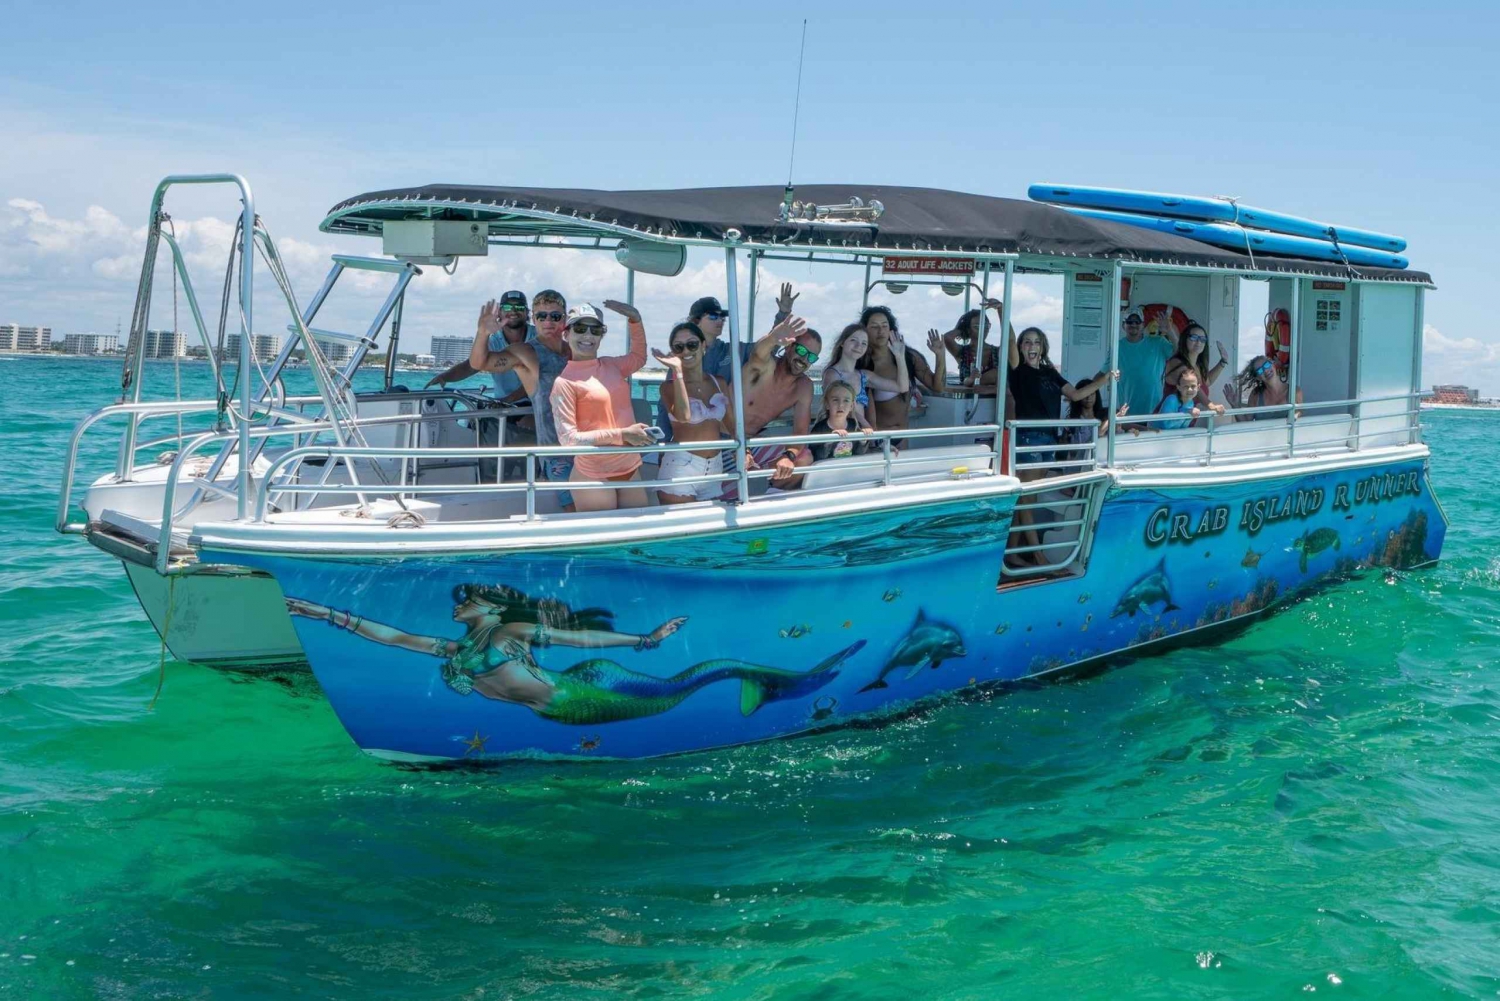 Destin: Crucero 'Crab Island Runner' para avistar delfines